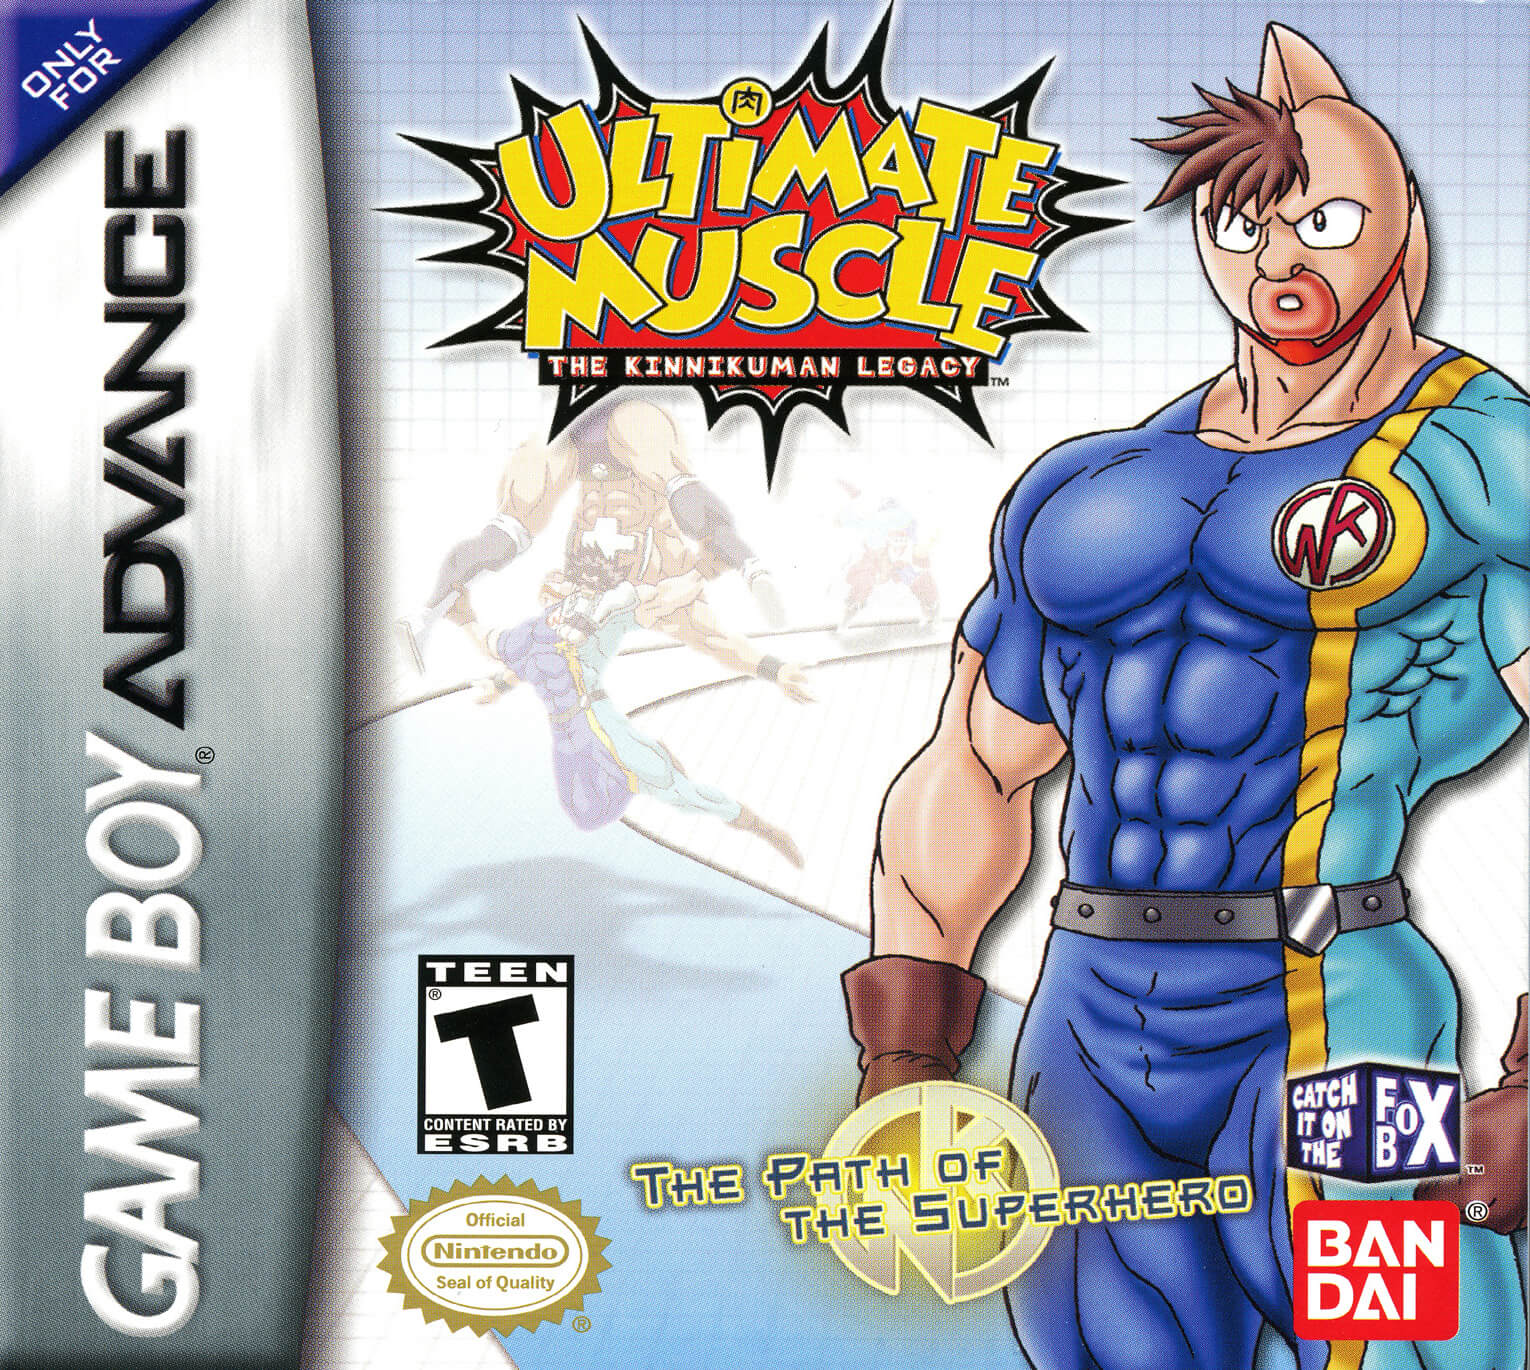 Ultimate Muscle: The Kinnikuman Legacy: The Path of the Superhero